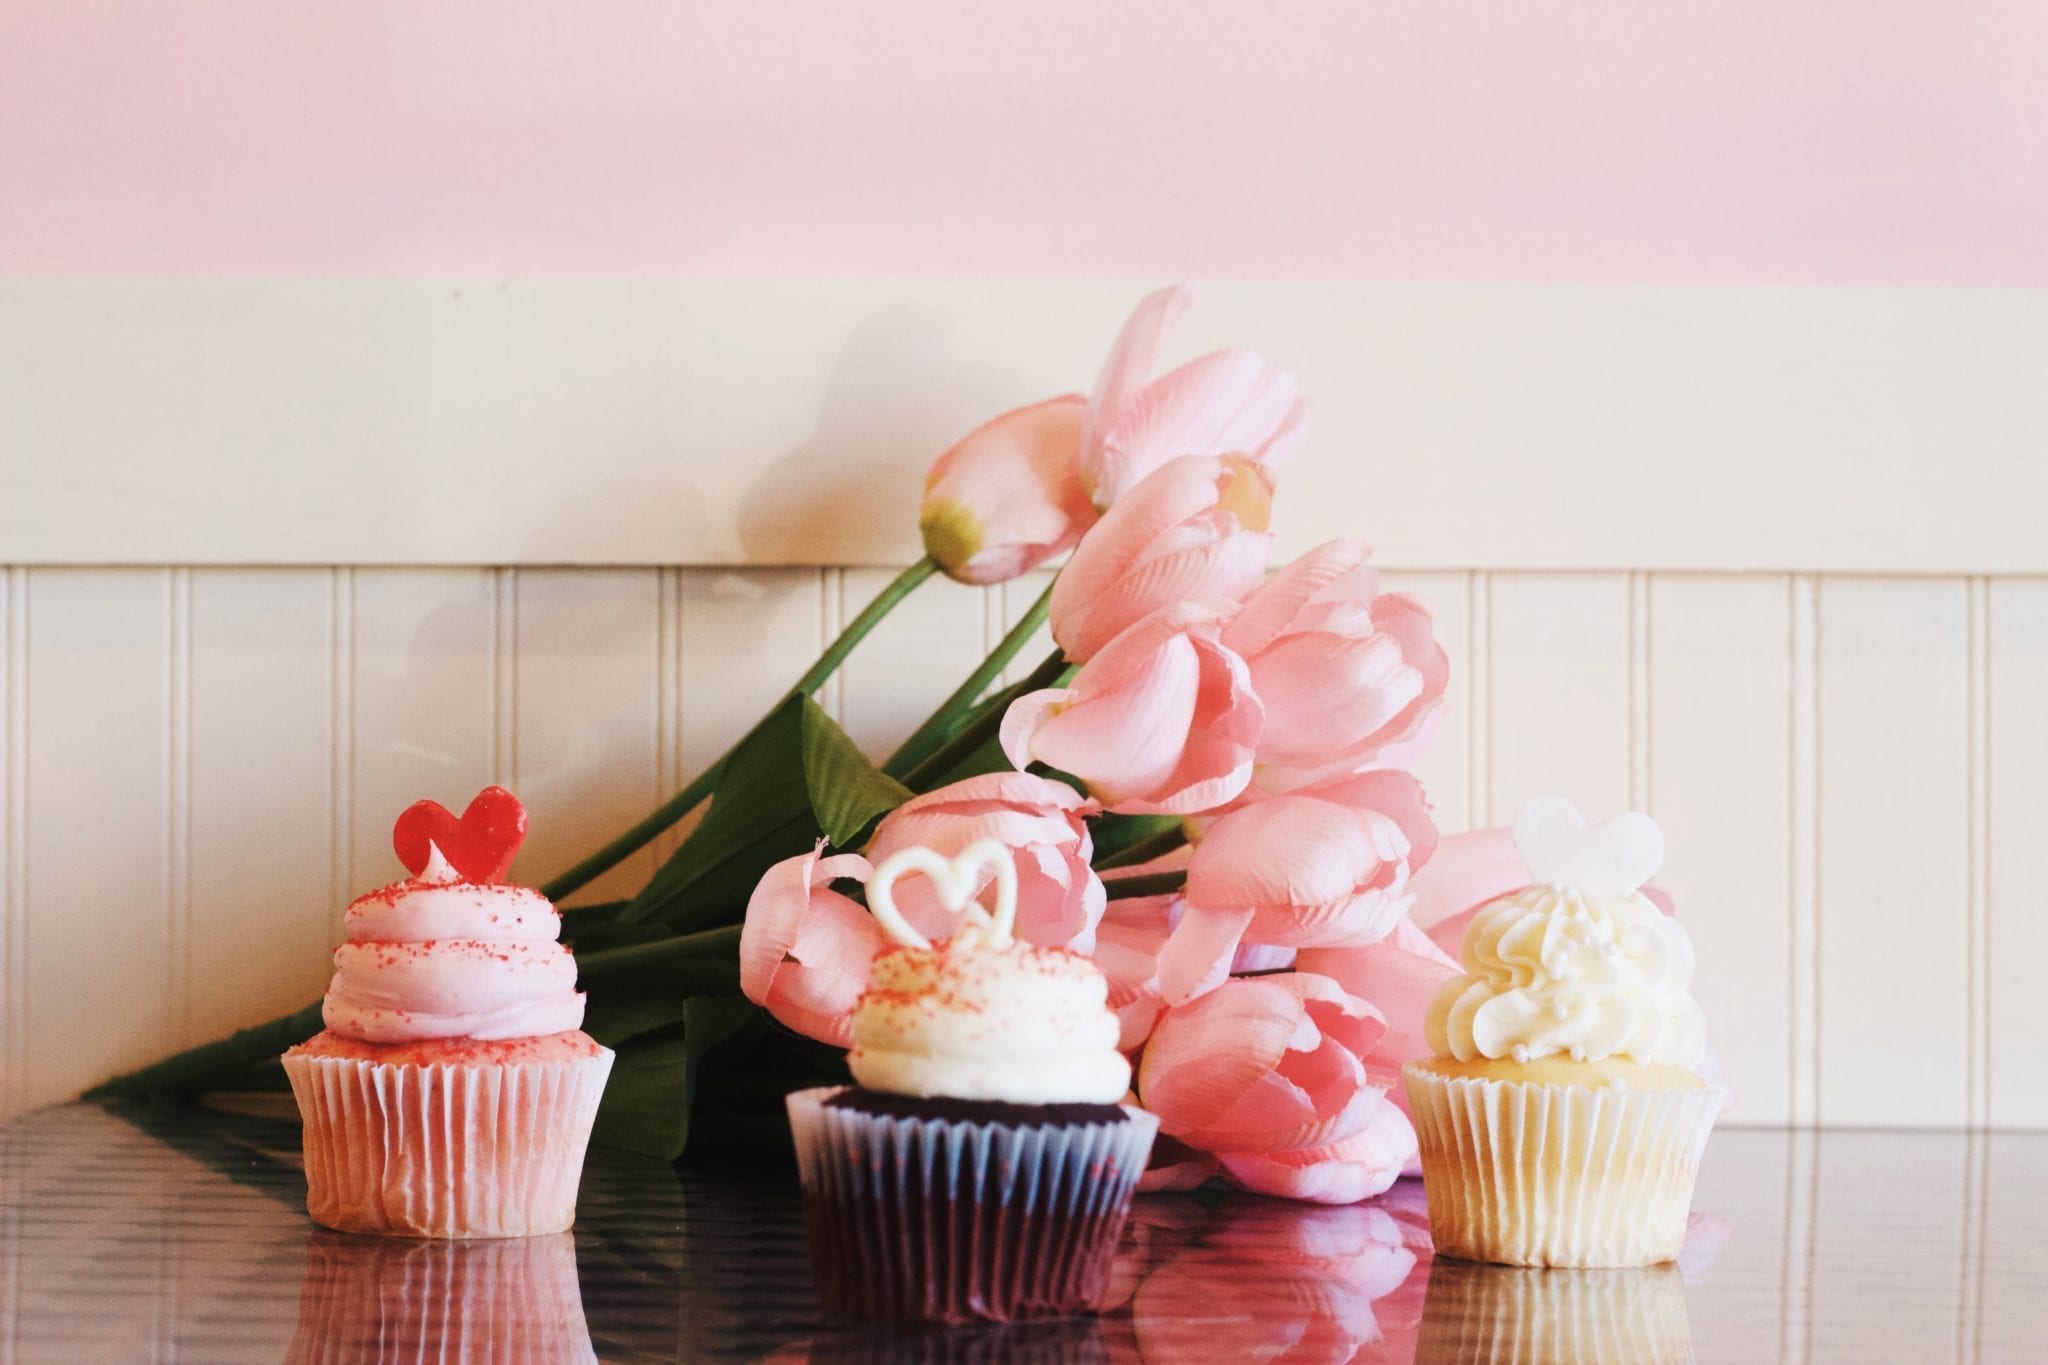 Cupcakes & Tulips